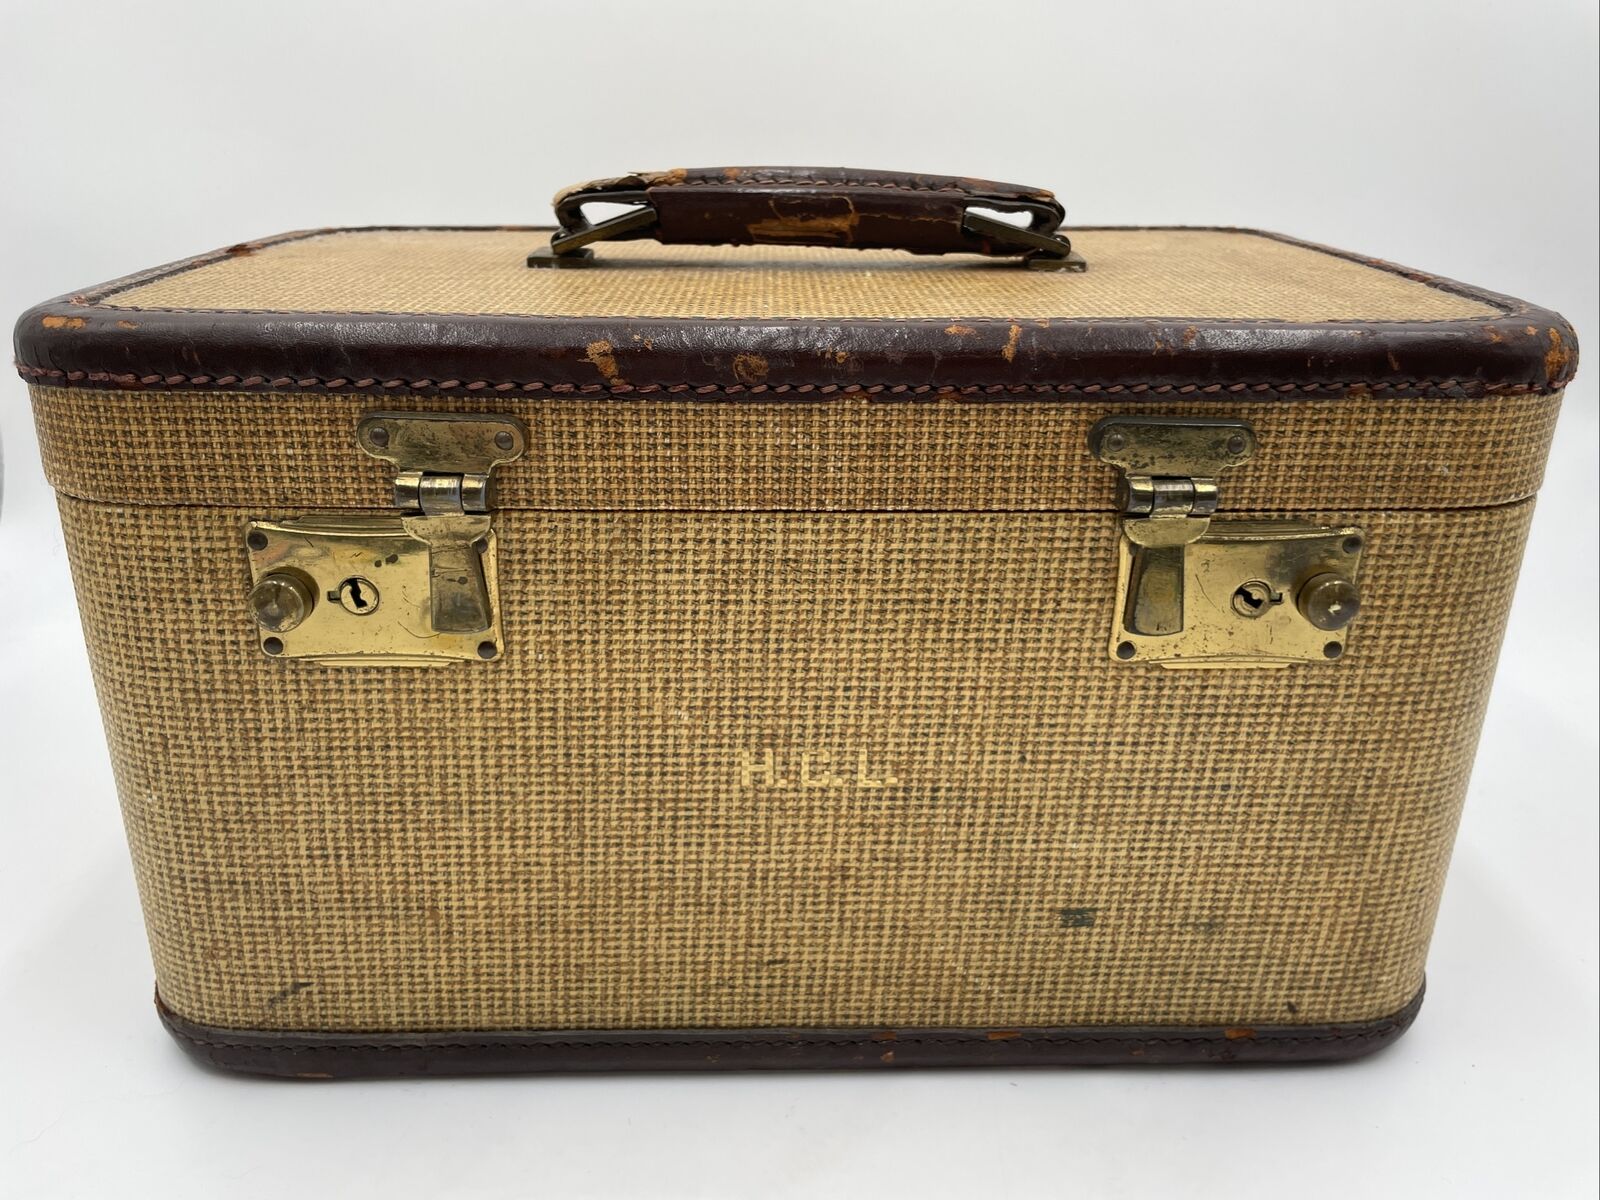 Vintage Tweed Train Case Suitcase Luggage Cosmetic Bag with Mirror and Key Locks